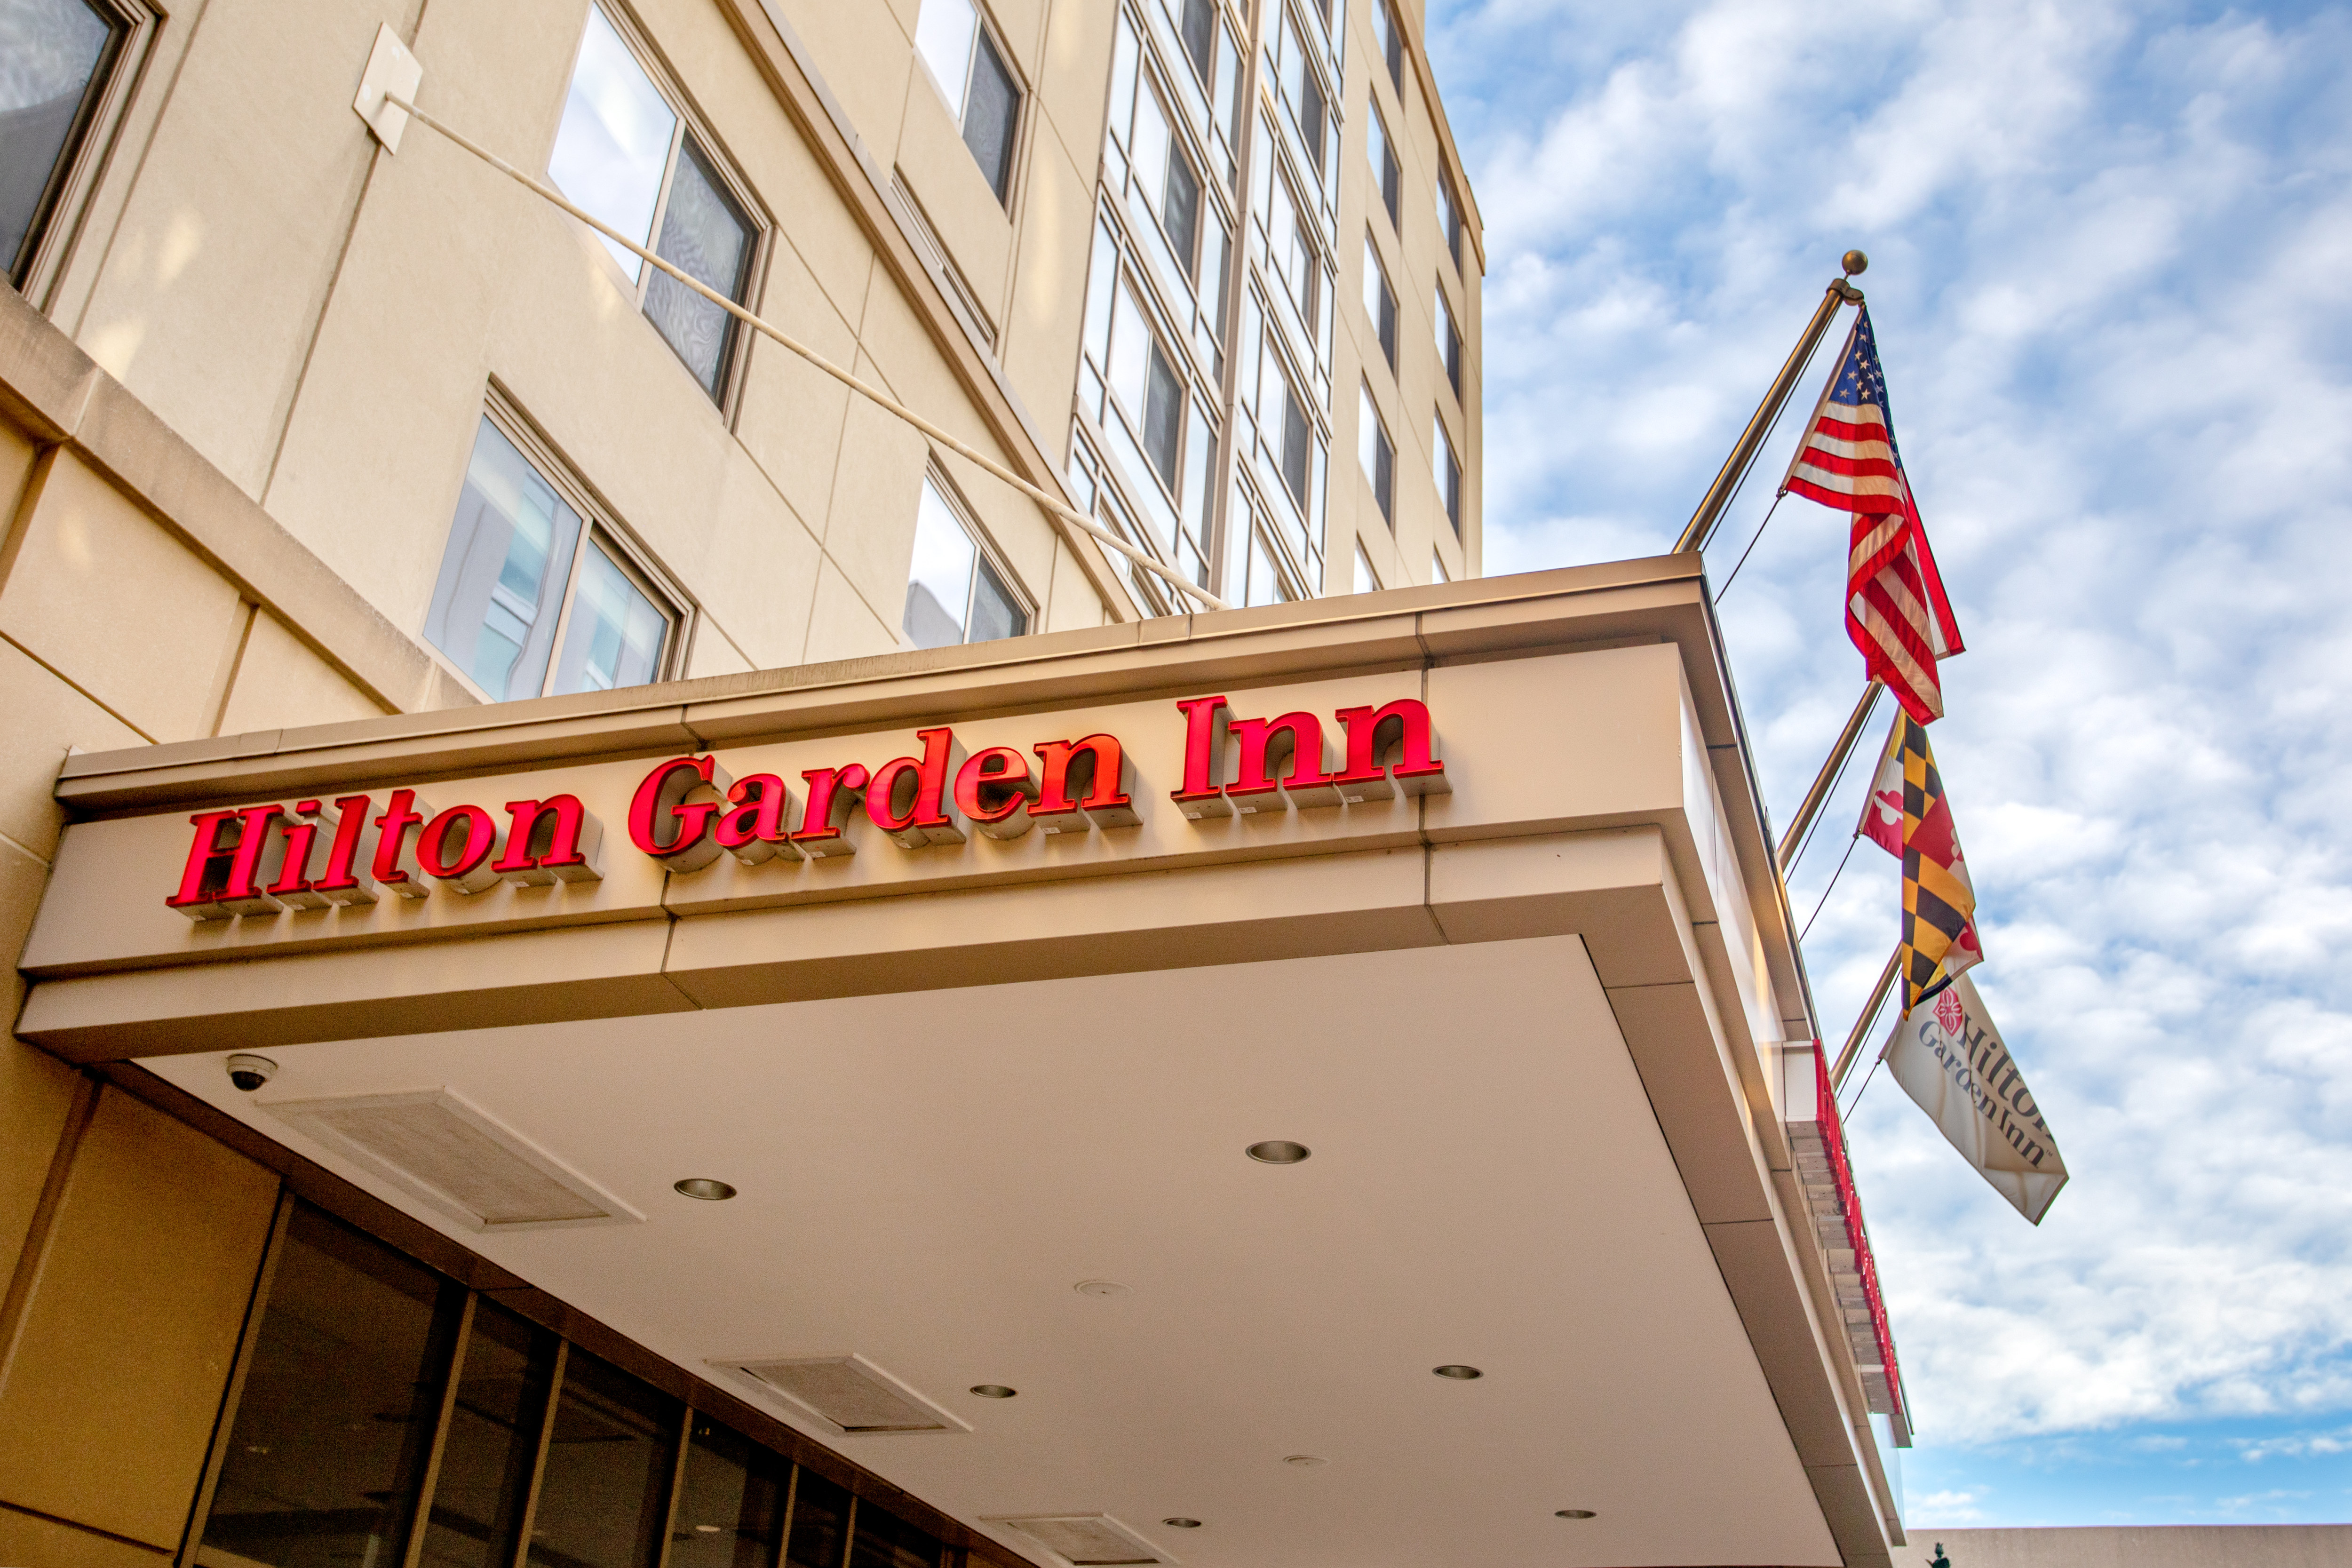 Hilton Garden Inn Hotel Exterior with Flags